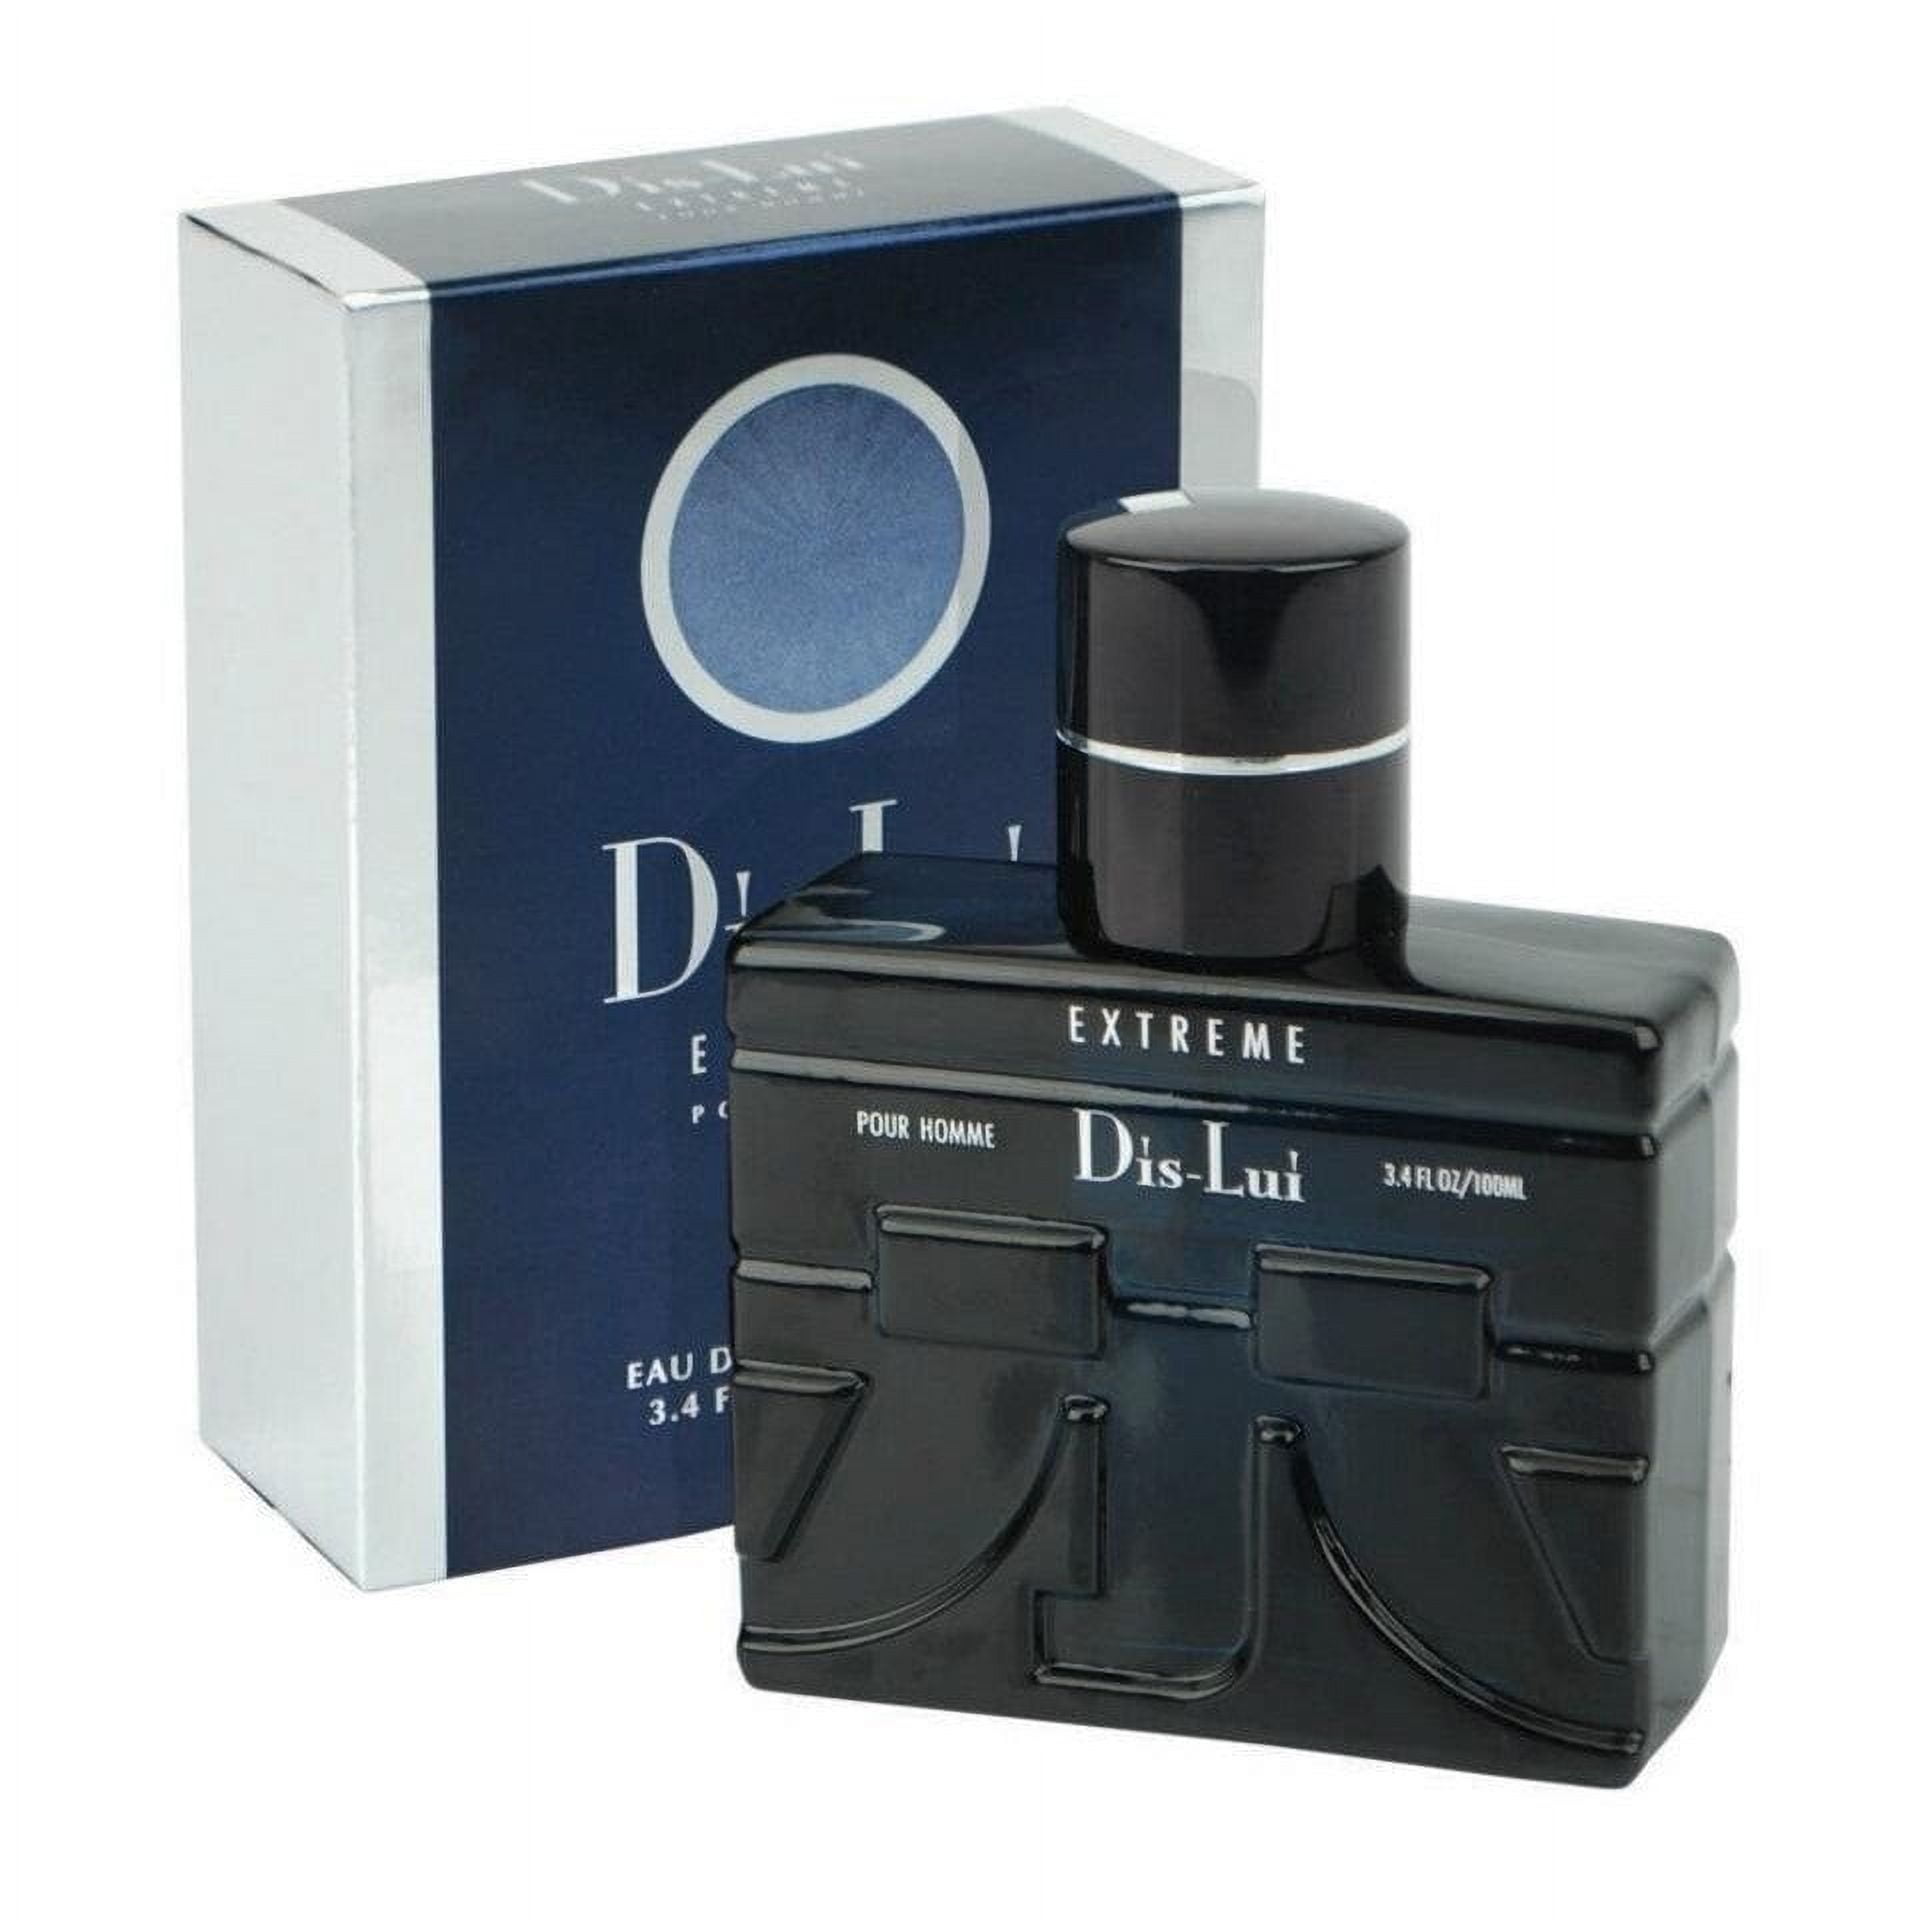 Dis Lui Blanche by YZY Perfume Eau de Parfum Spray 3.4 oz and A Mystery Name Brand Sample vile